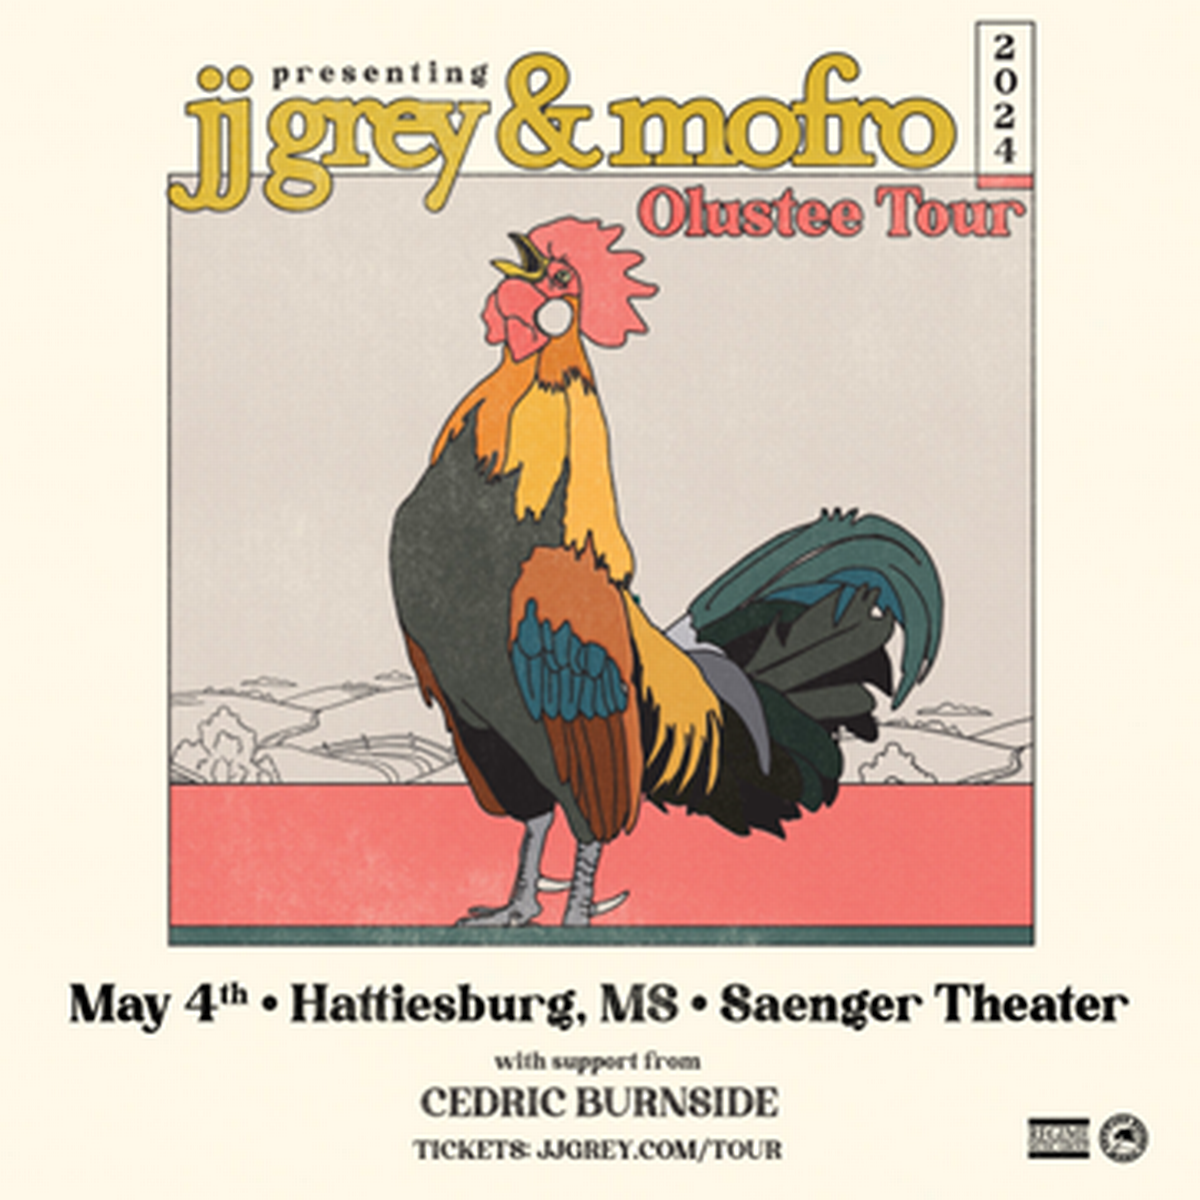 JJ Grey & Mofro Olustee Tour Coming to Hattiesburg’s Saenger Theater 5